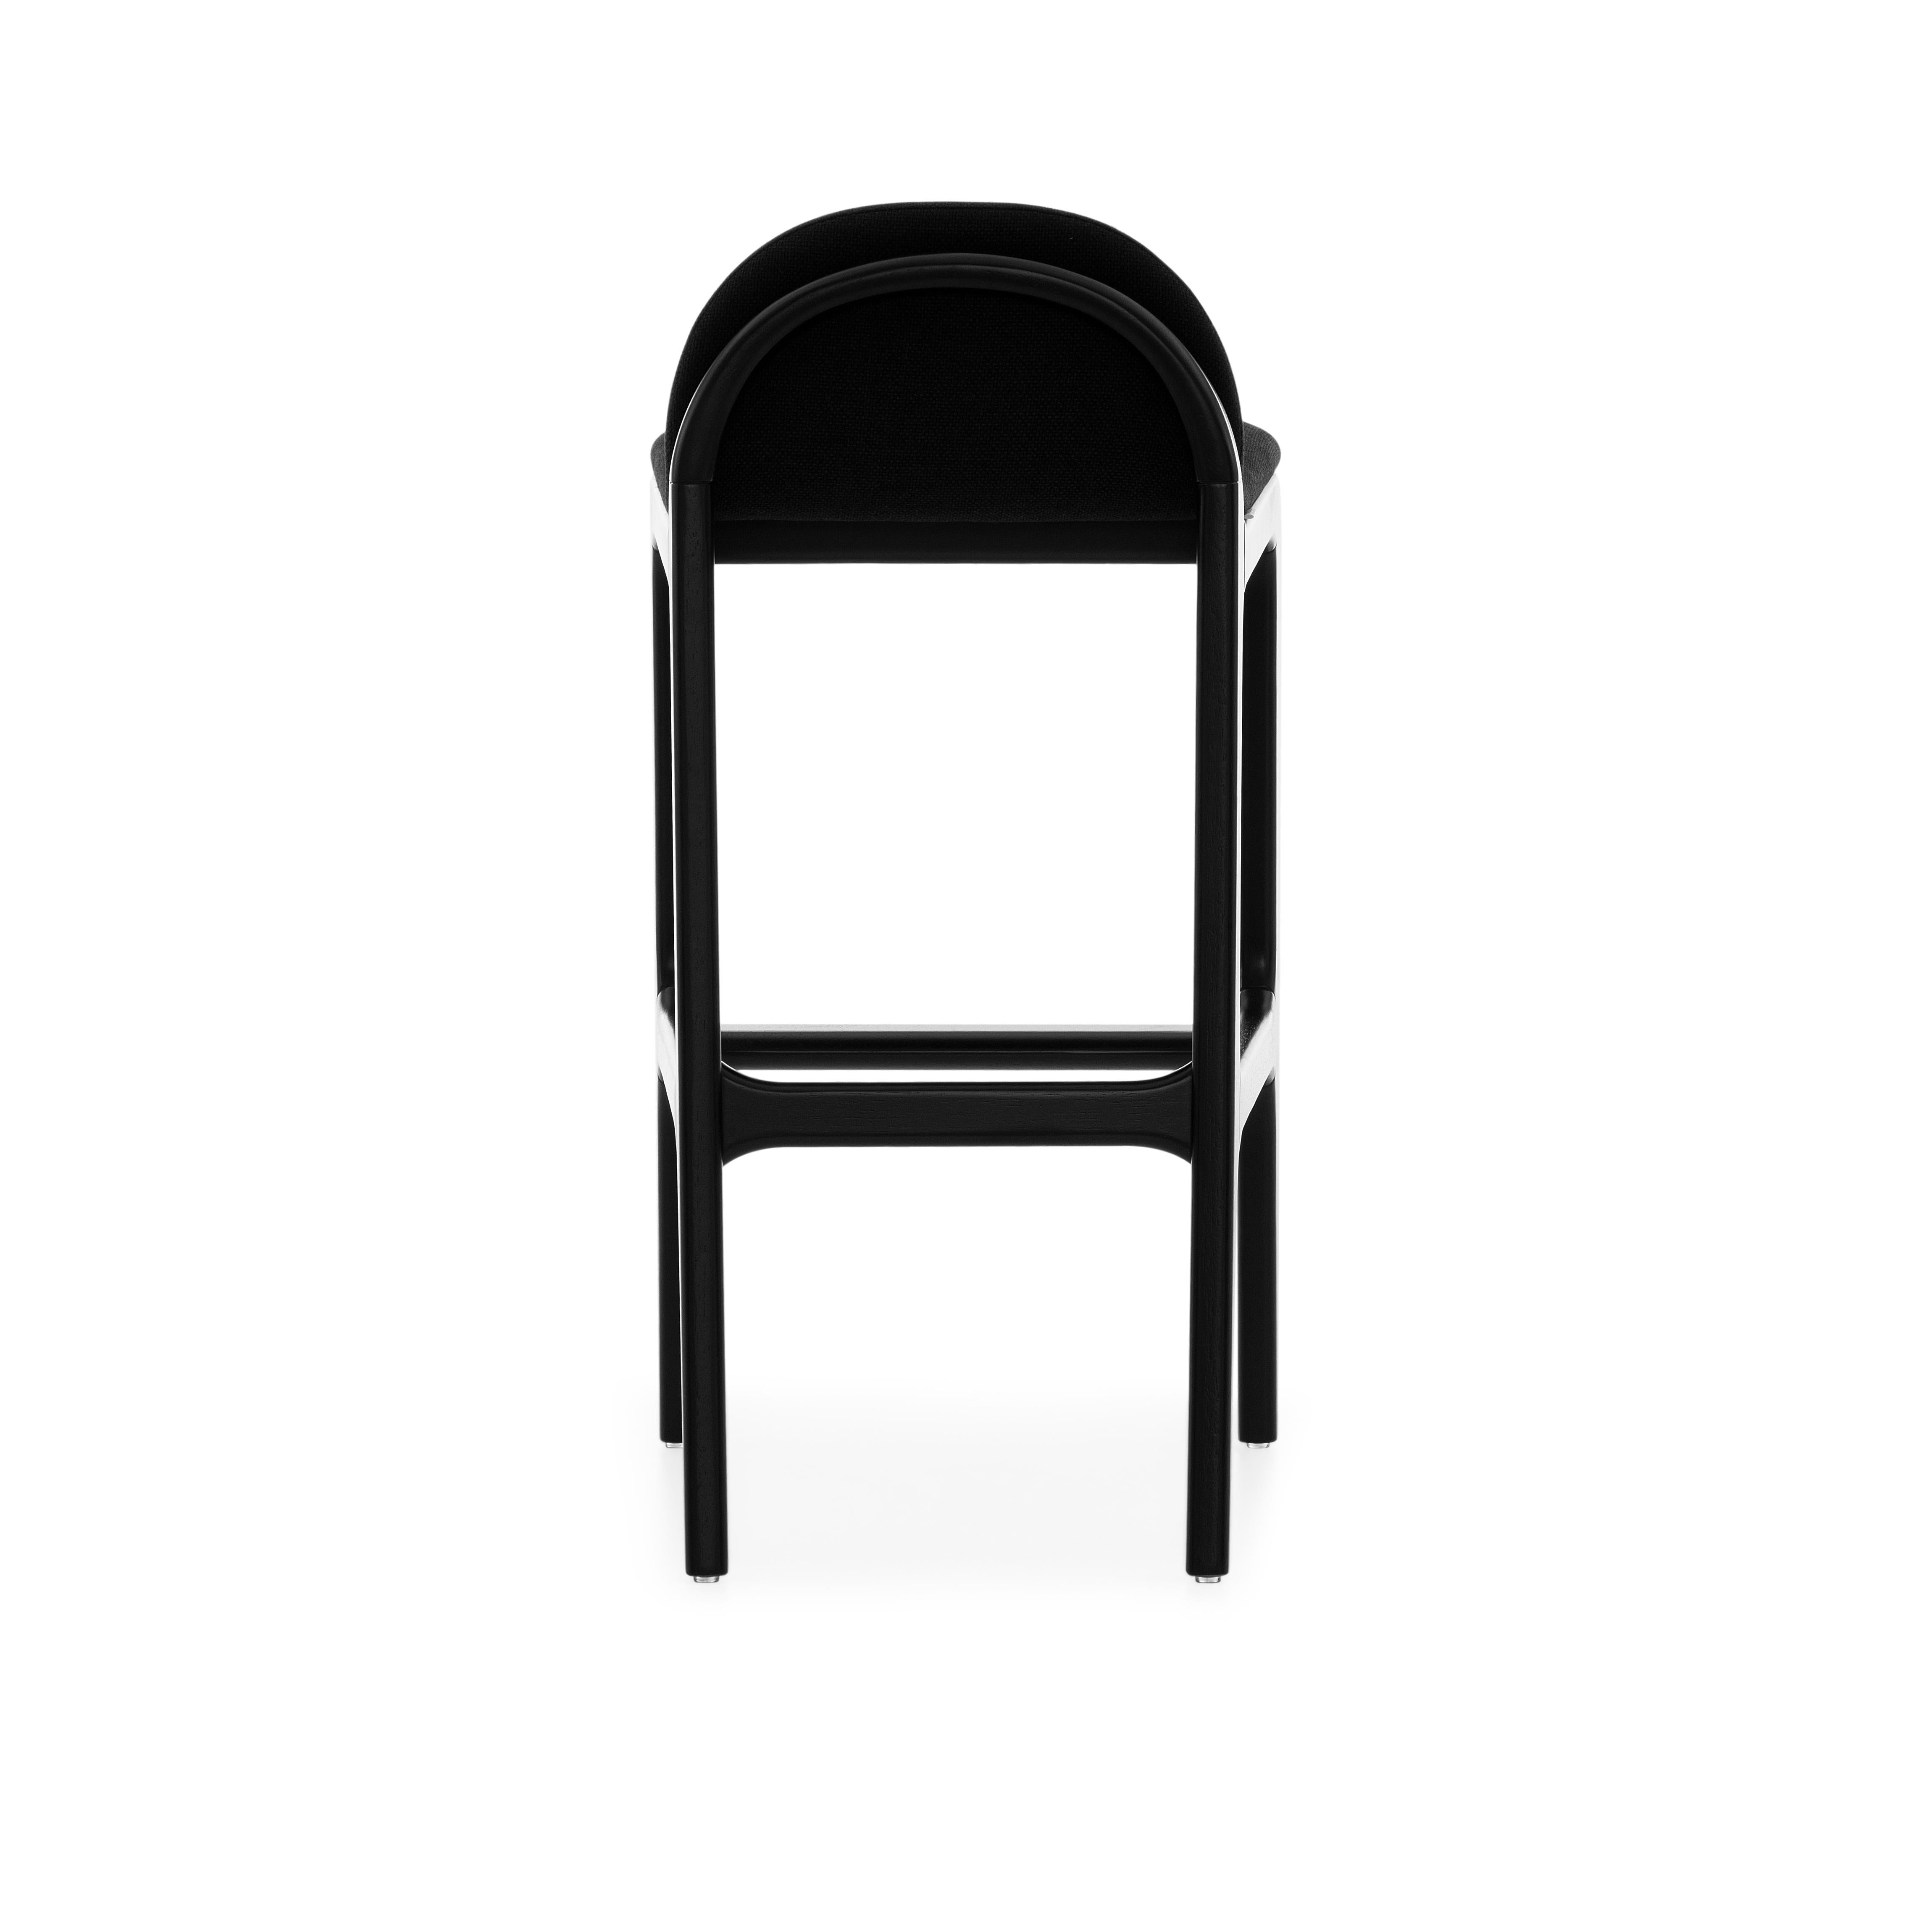 Brazilian Ura Bar Stool in Black Wood Finish Base and Upholstered Black Seat For Sale